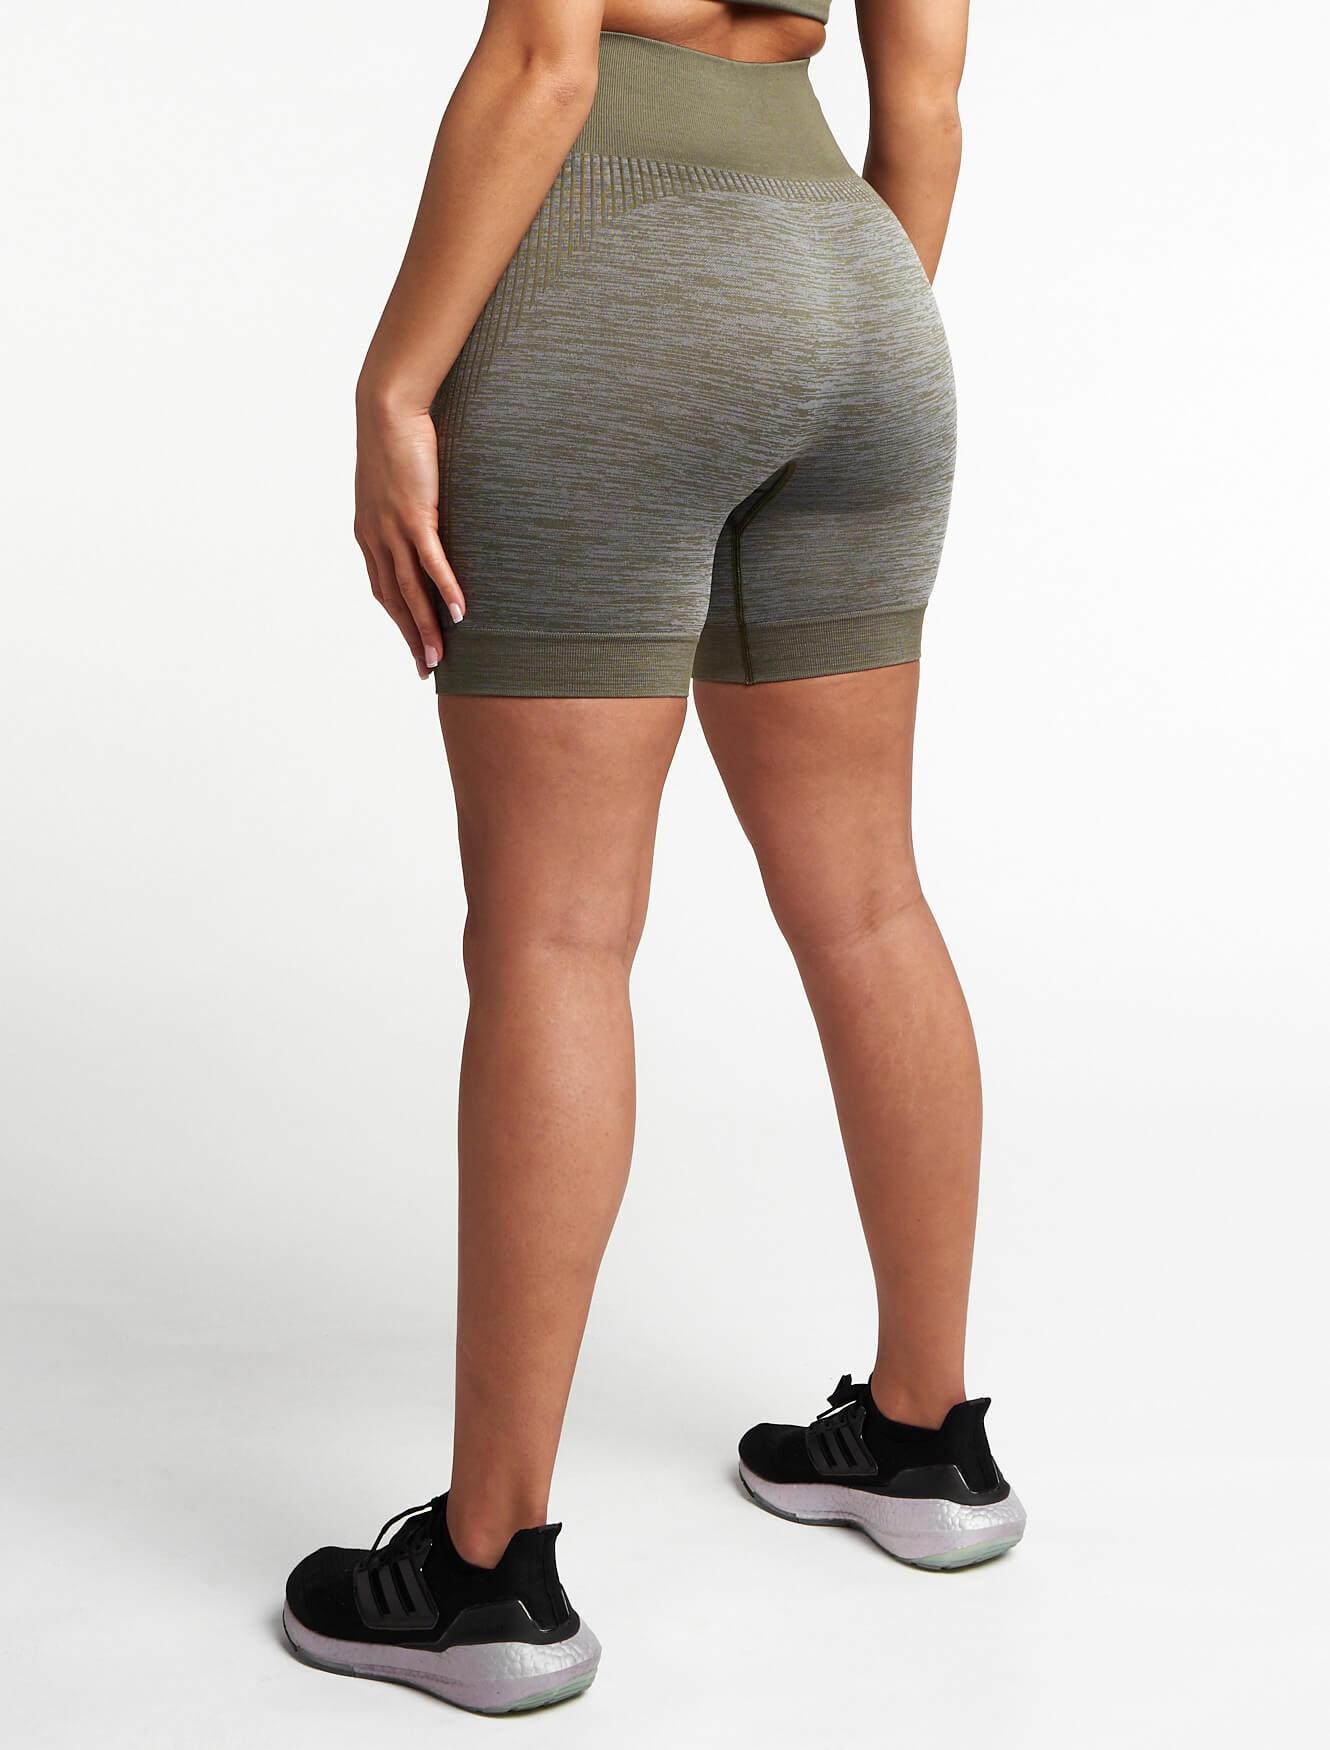 ADAPT Seamless Shorts / Khaki Pursue Fitness 2